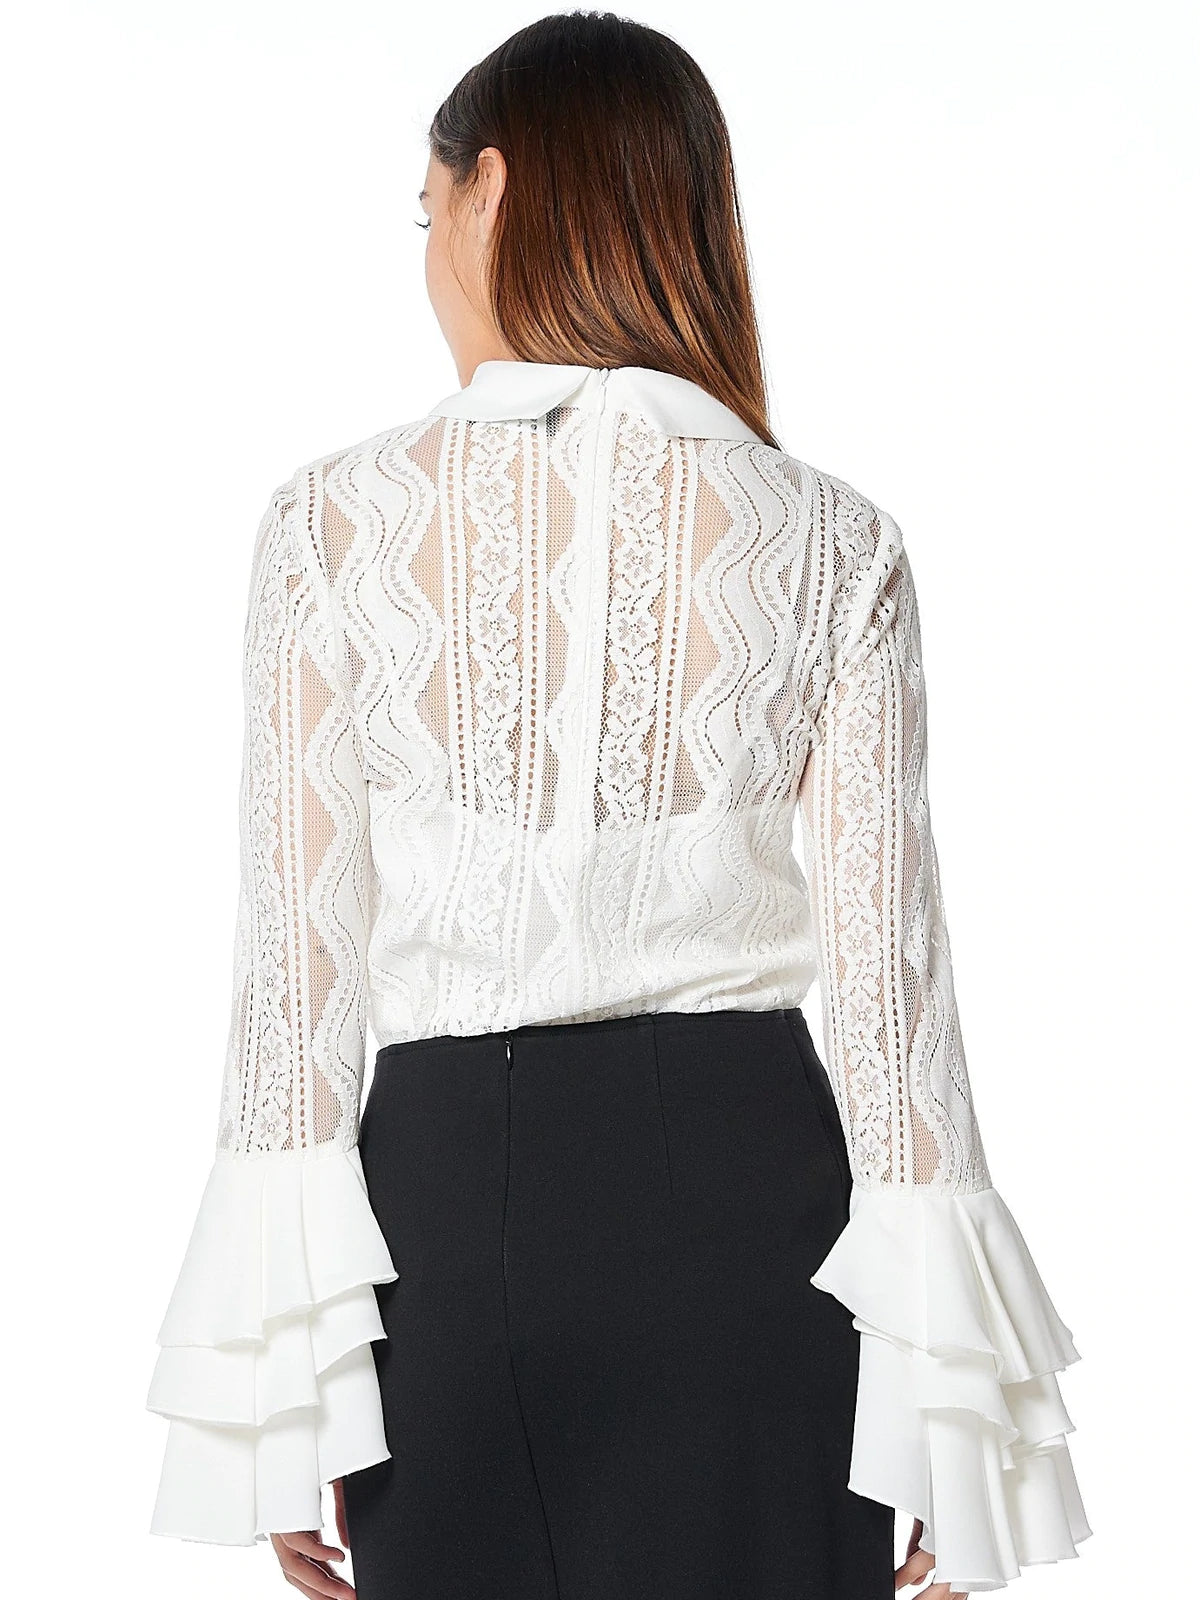 Ruffled long sleeved sheer blouse